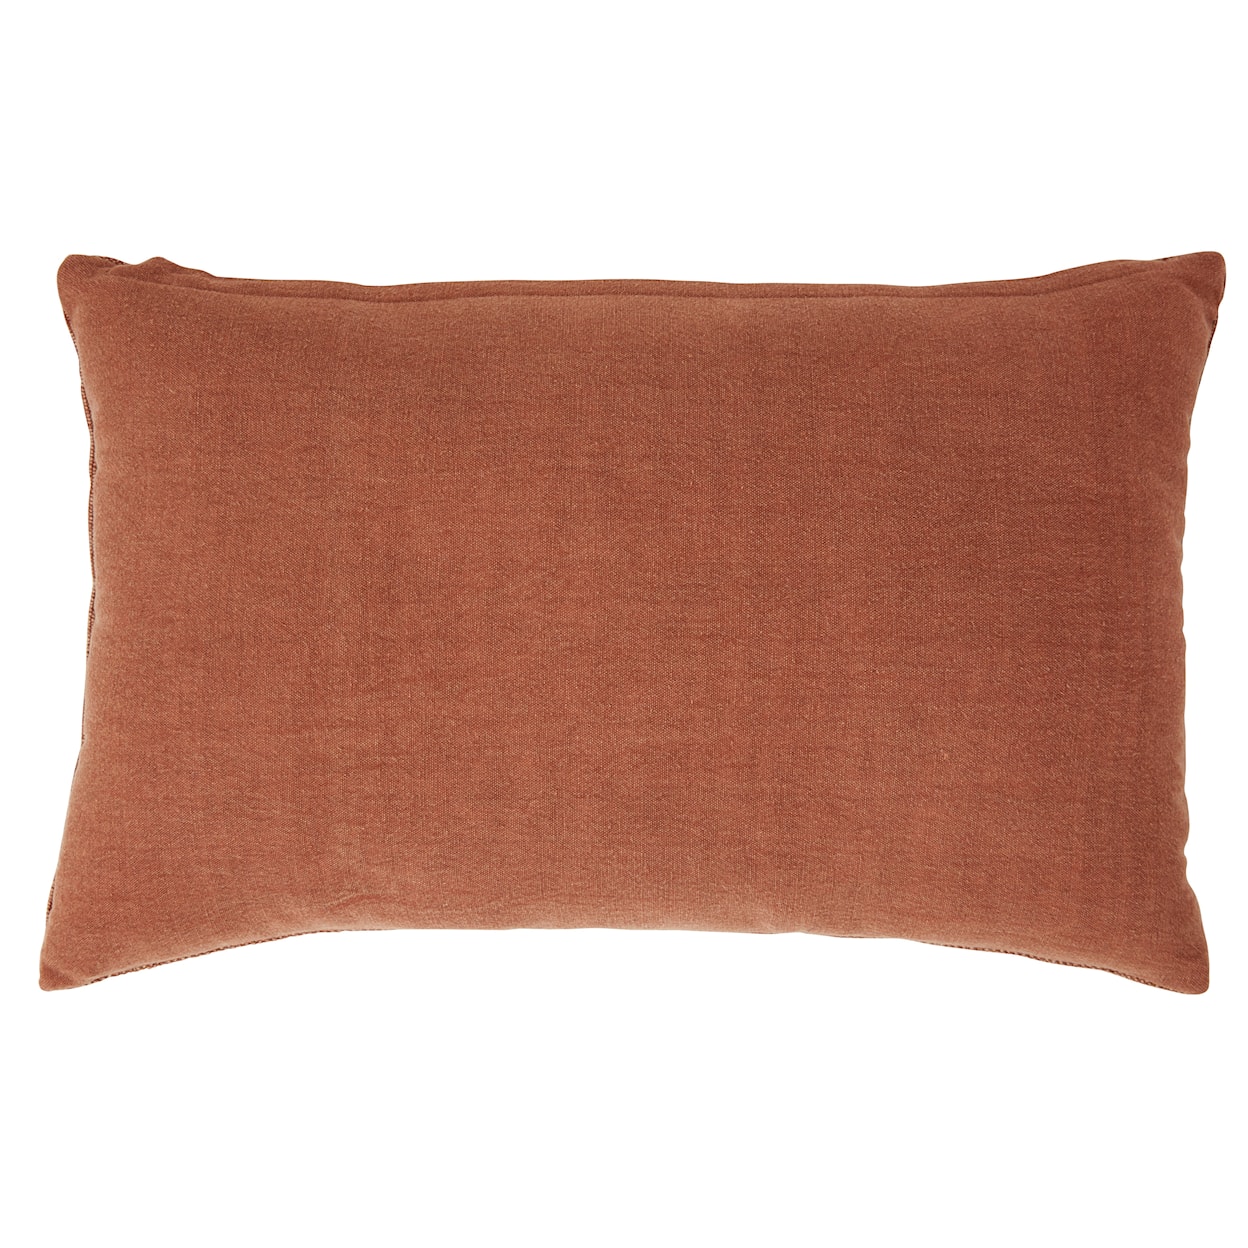 StyleLine Pillows Dovinton Pillow